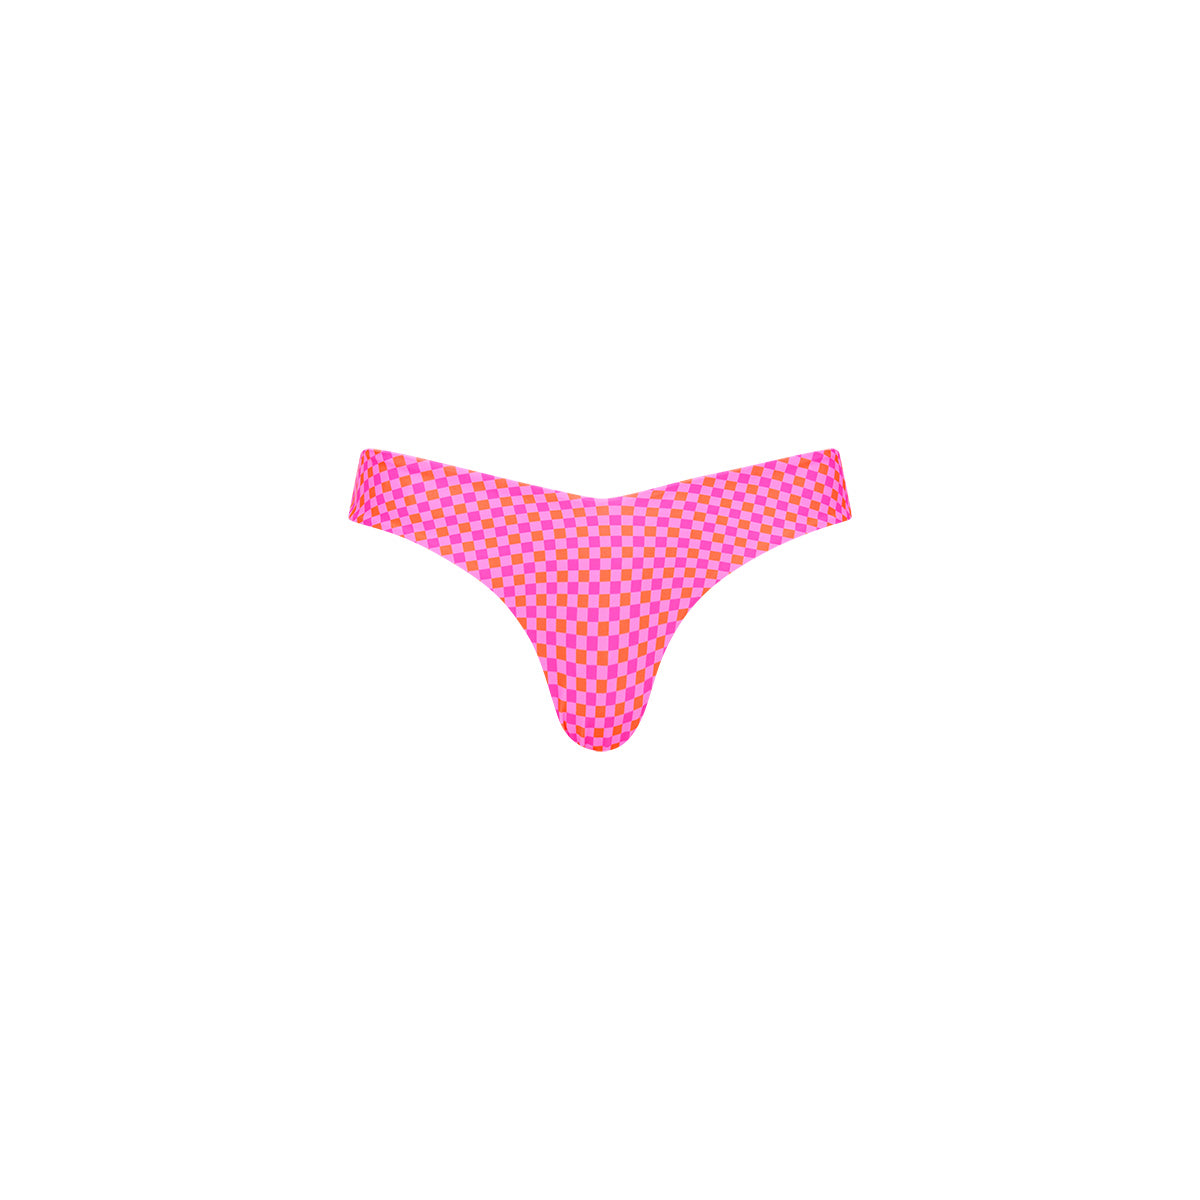 Kulani Kinis Cheeky V Bikini Bottom - Pinky Promise (Atomic Daisy Collection)